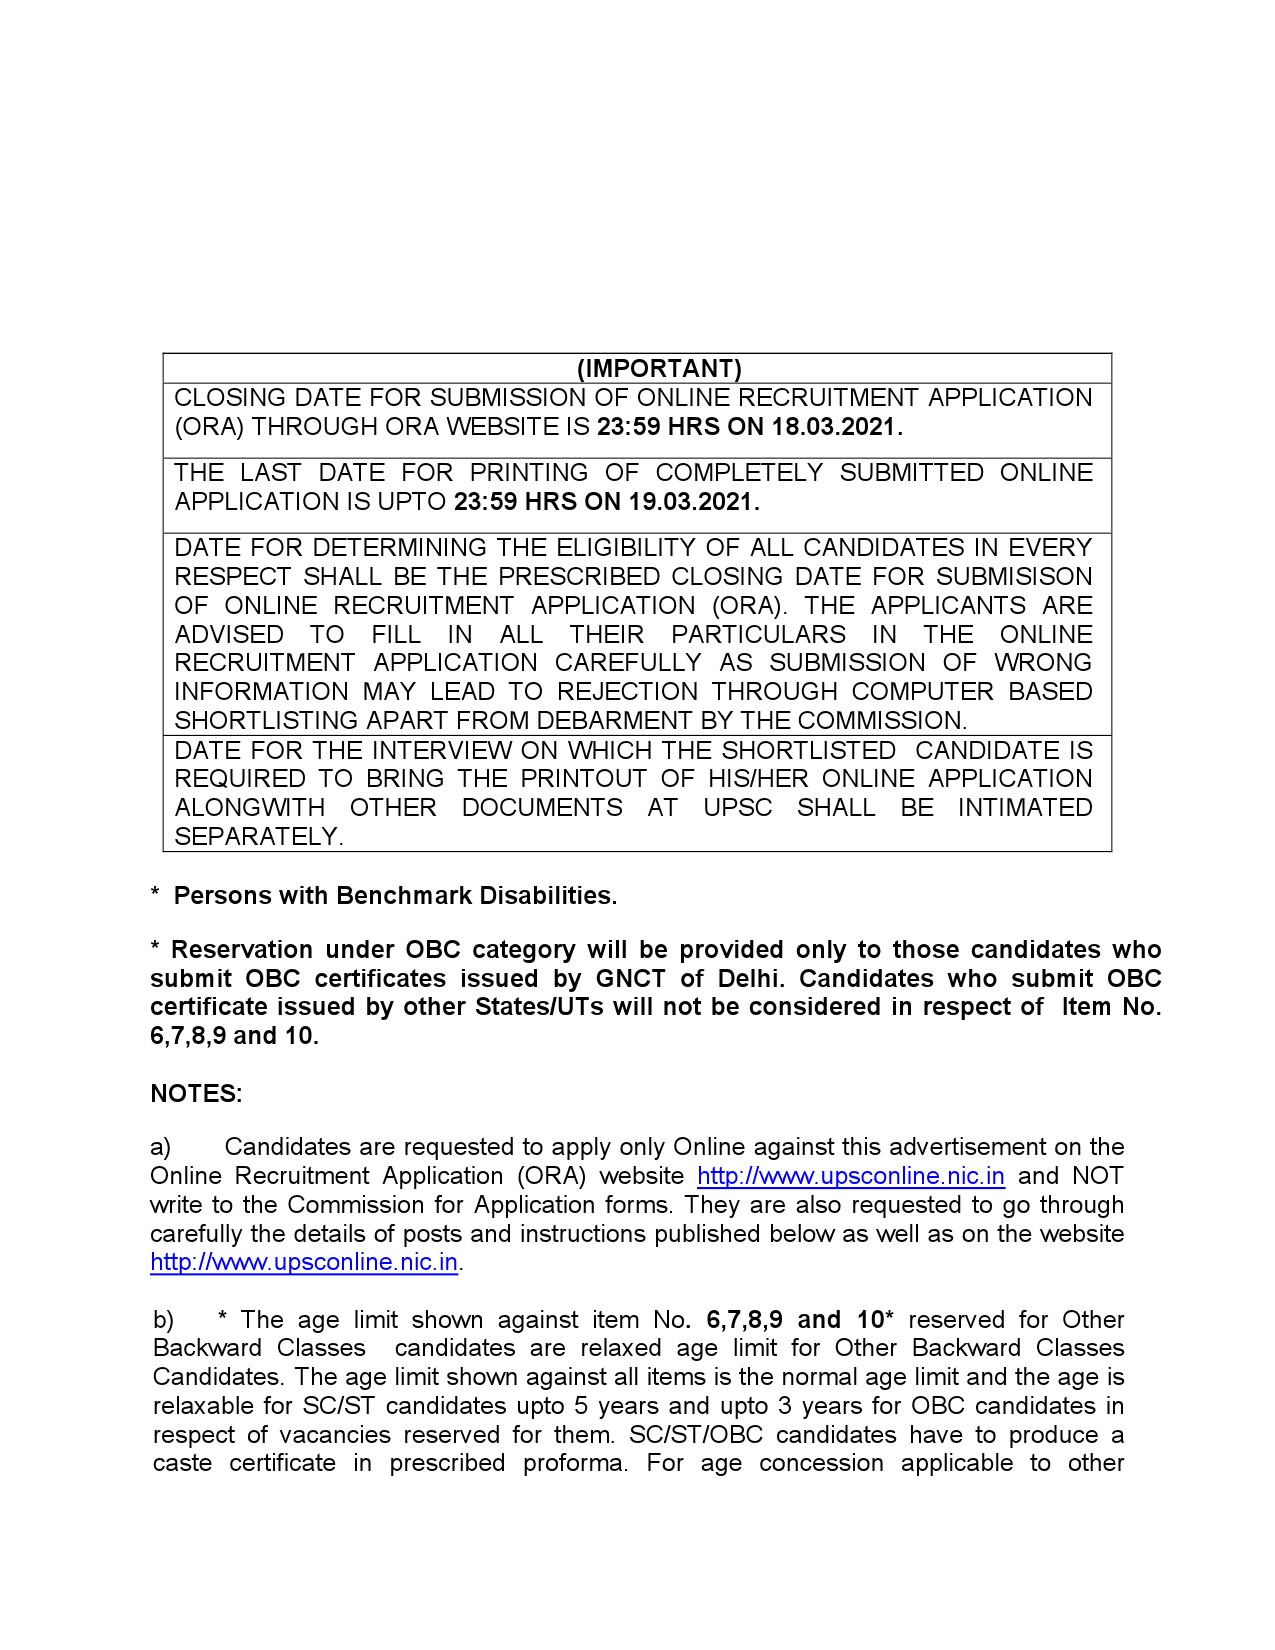 UPSC Notification 042021 for Multiple vacancies - Notification Image 6